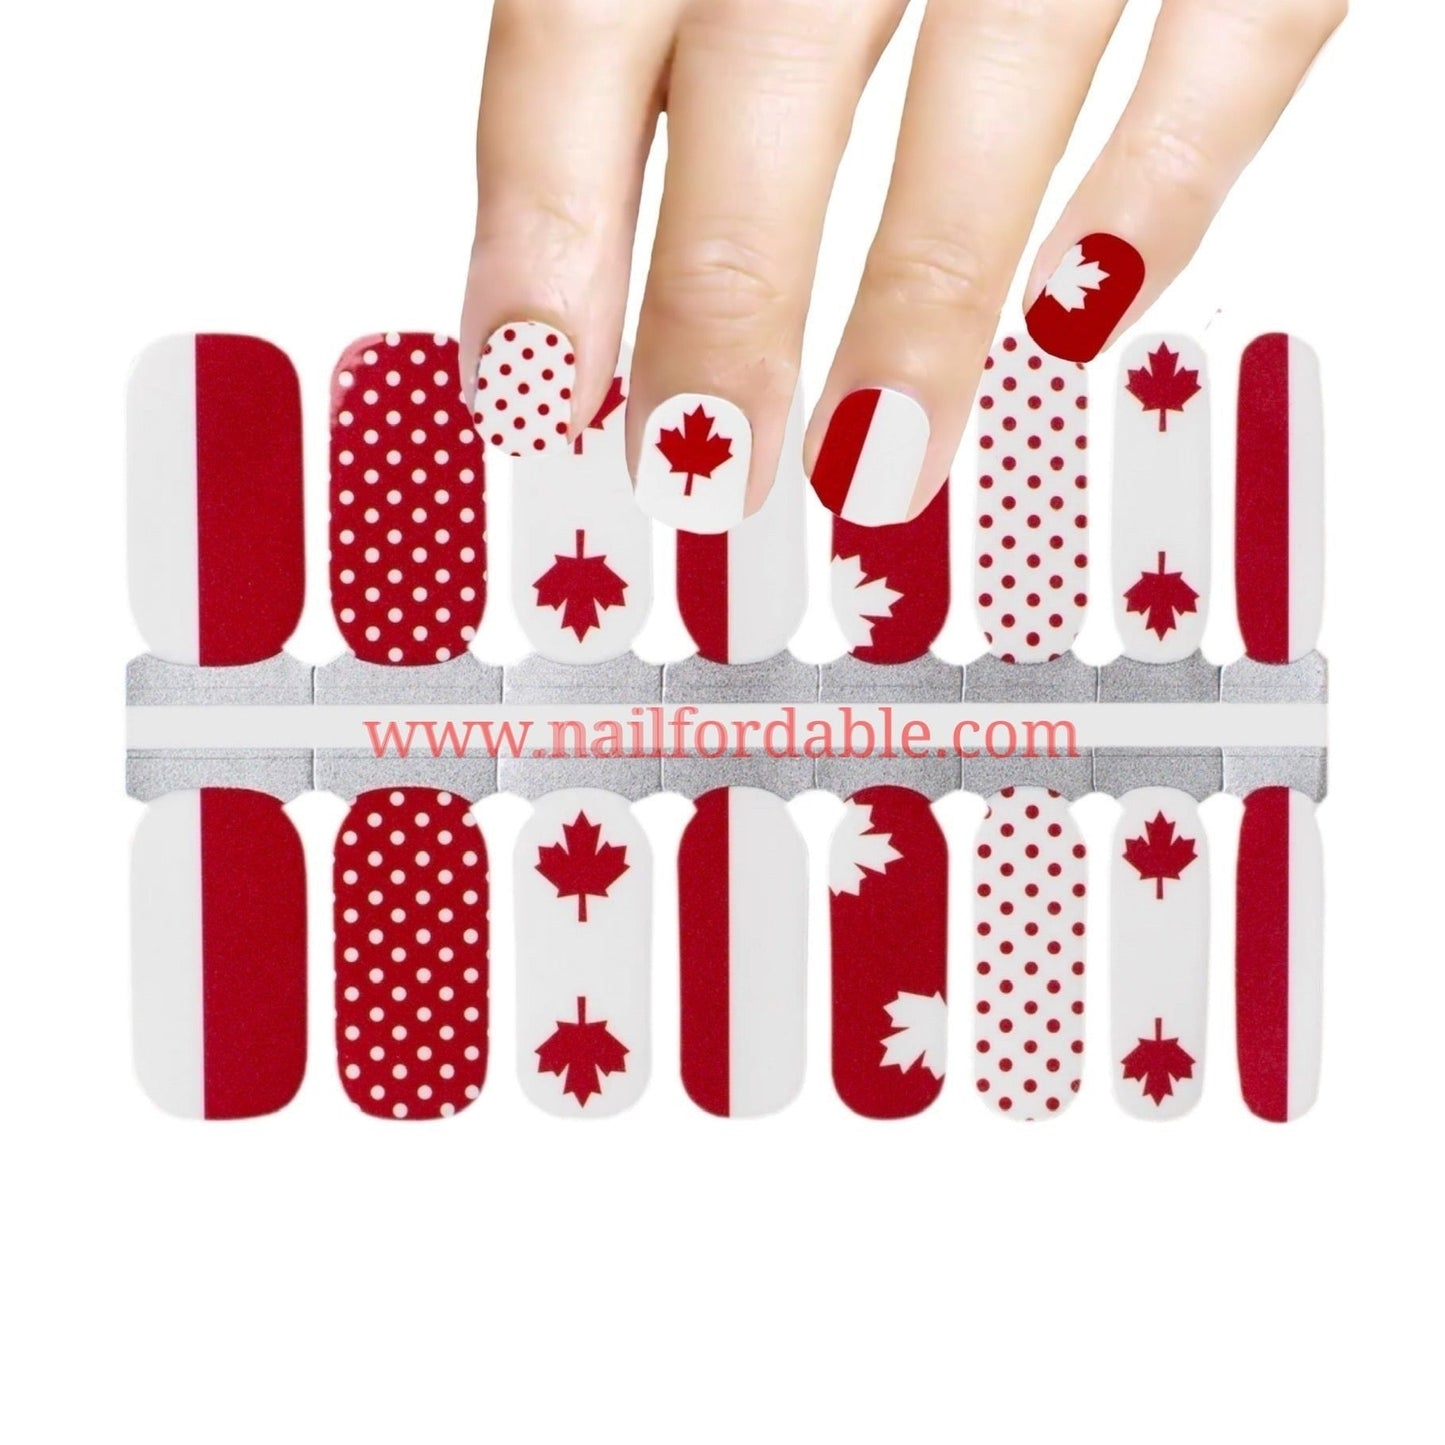 Canada Flag Nail Wraps | Semi Cured Gel Wraps | Gel Nail Wraps |Nail Polish | Nail Stickers